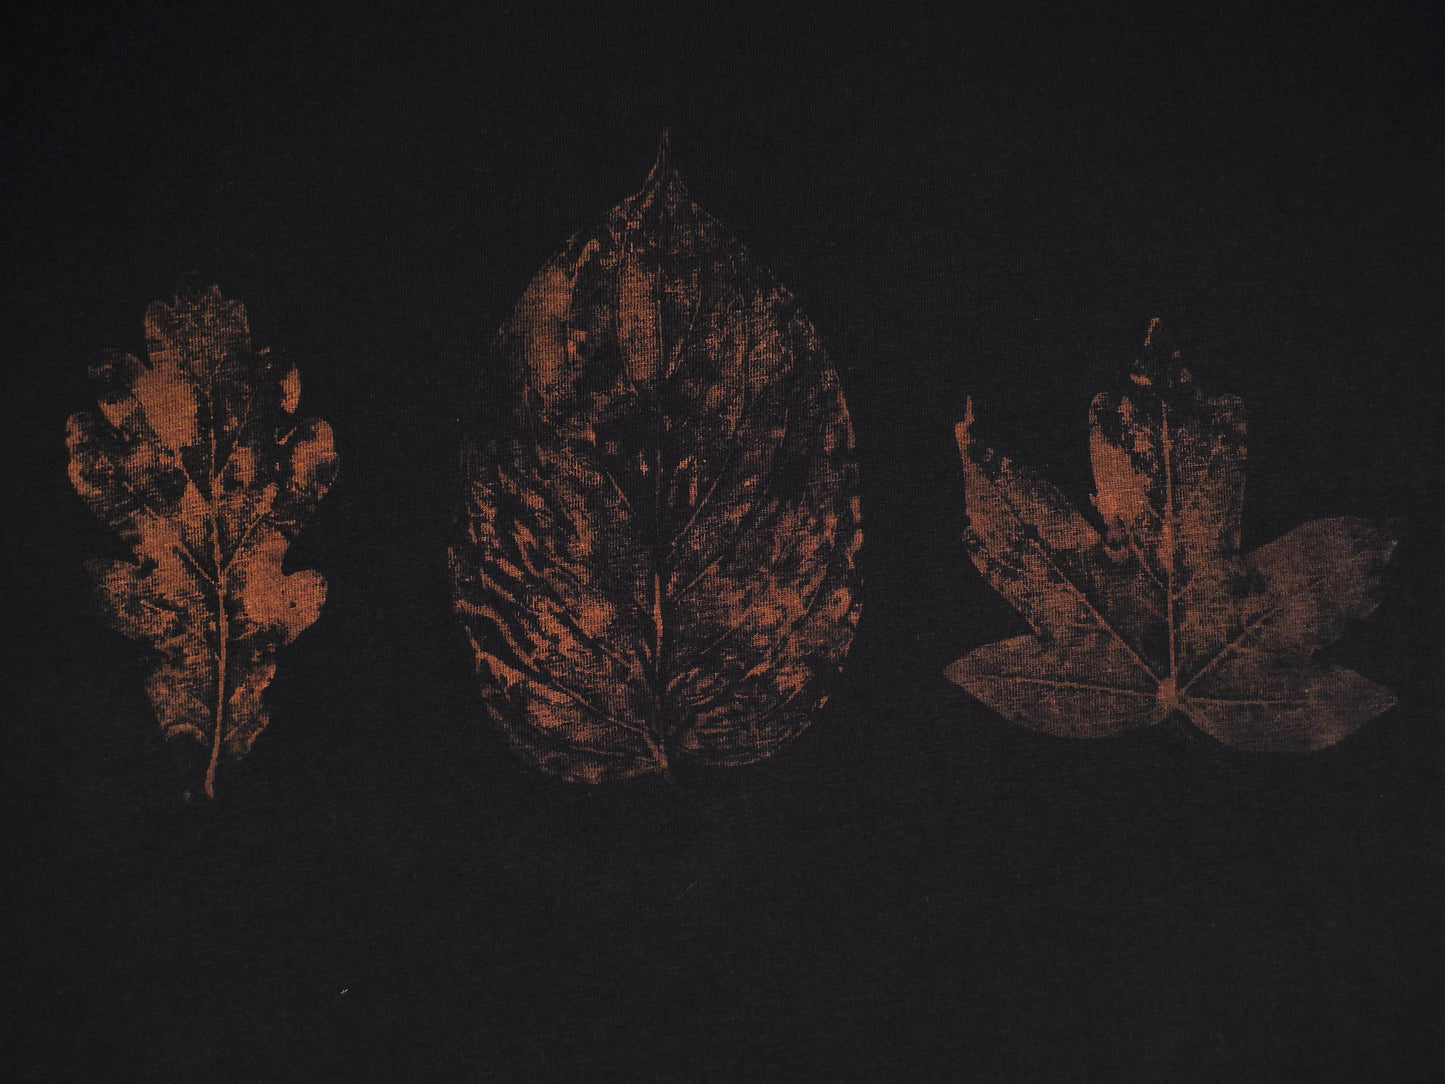 Three Leaf Hand Printed Organic Cotton T-Shirt - Black M - Bare Canvas